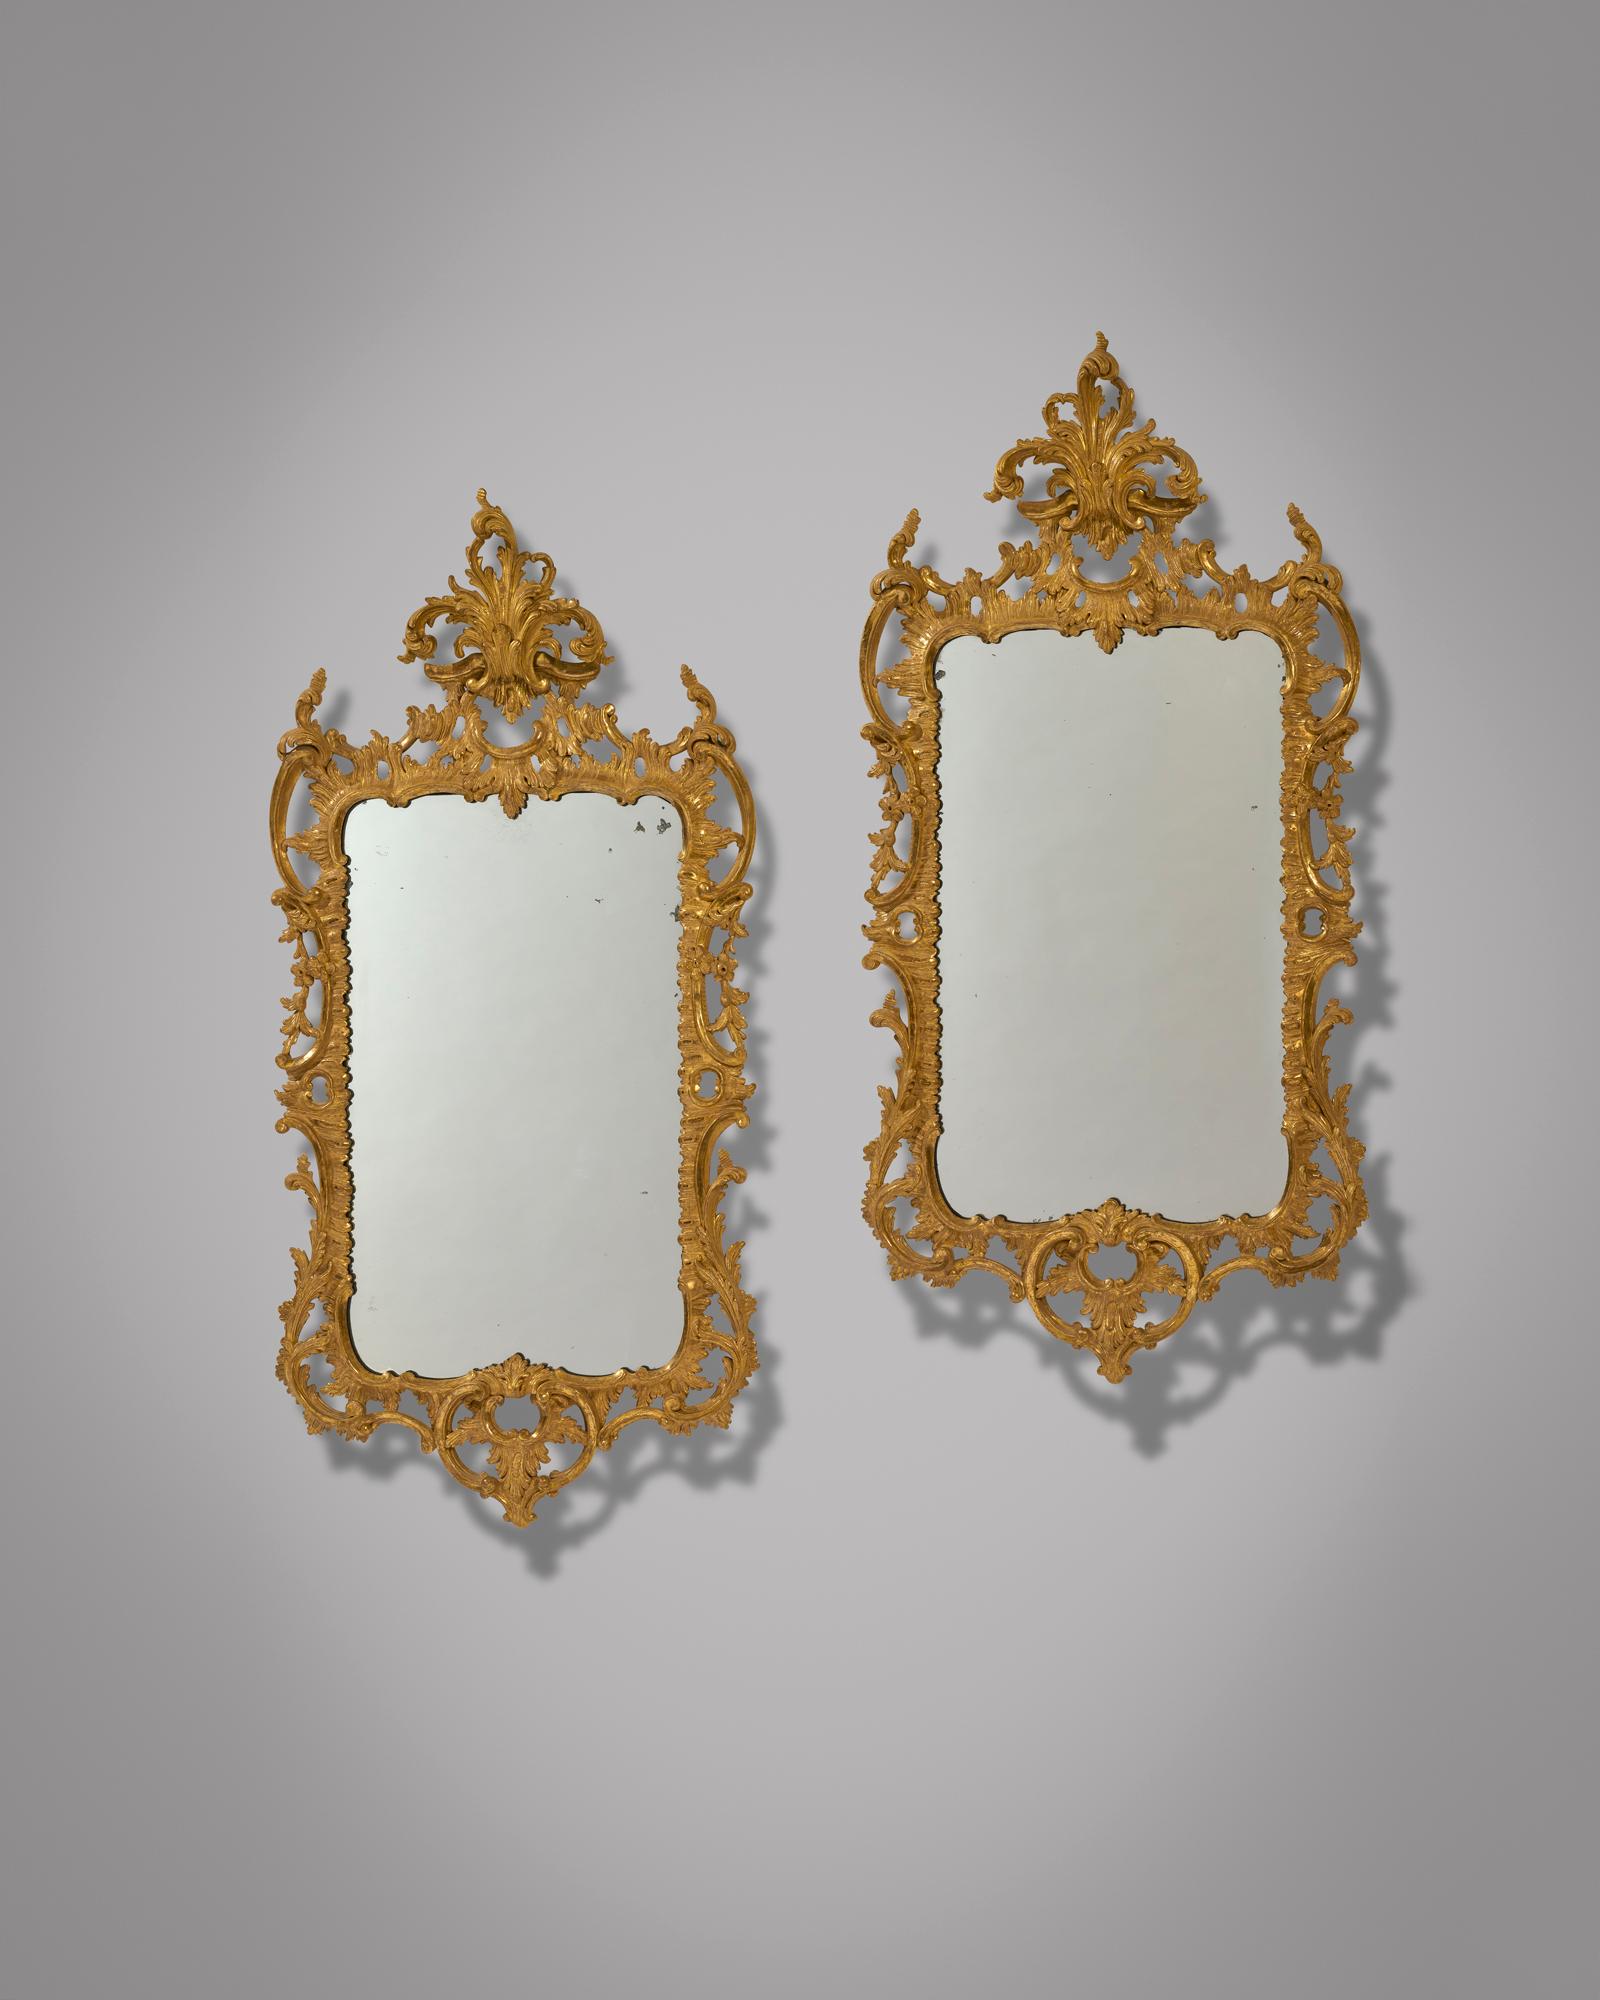 A Rare Pair of George III 18th Century Rocco Giltwood Mirrors, Circa 1750-1760-1